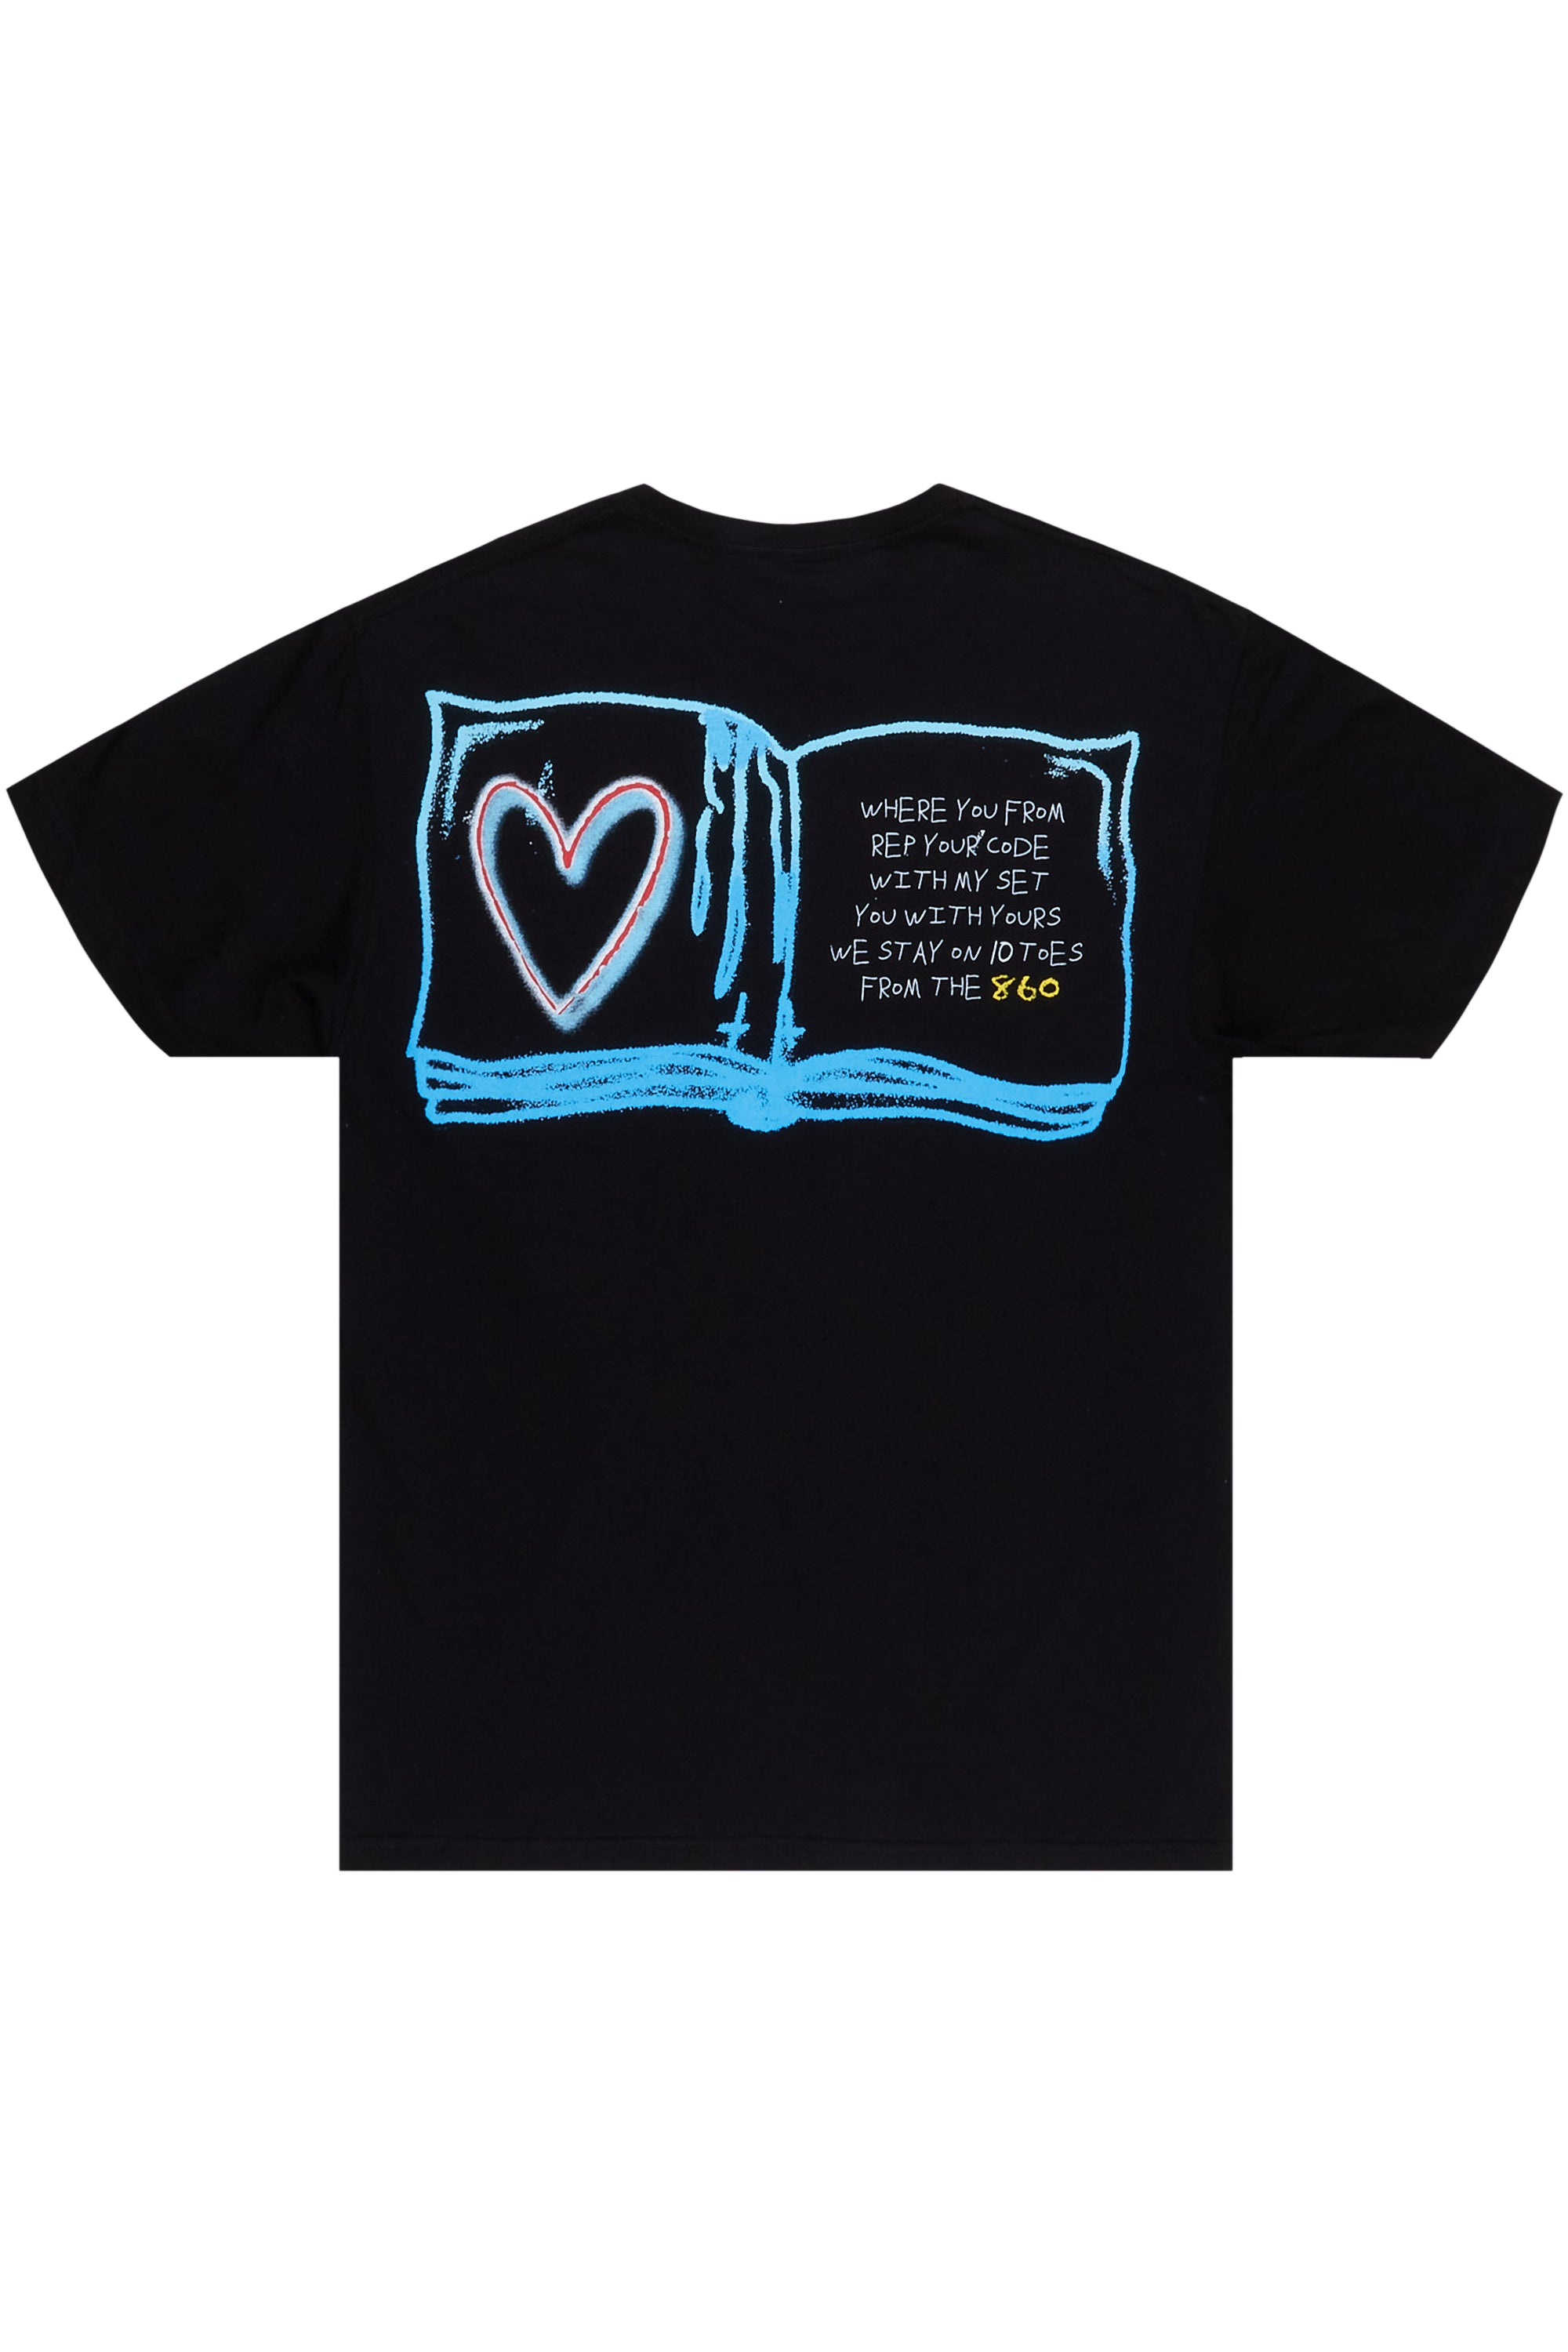 Drummond Black Graphic T-Shirt